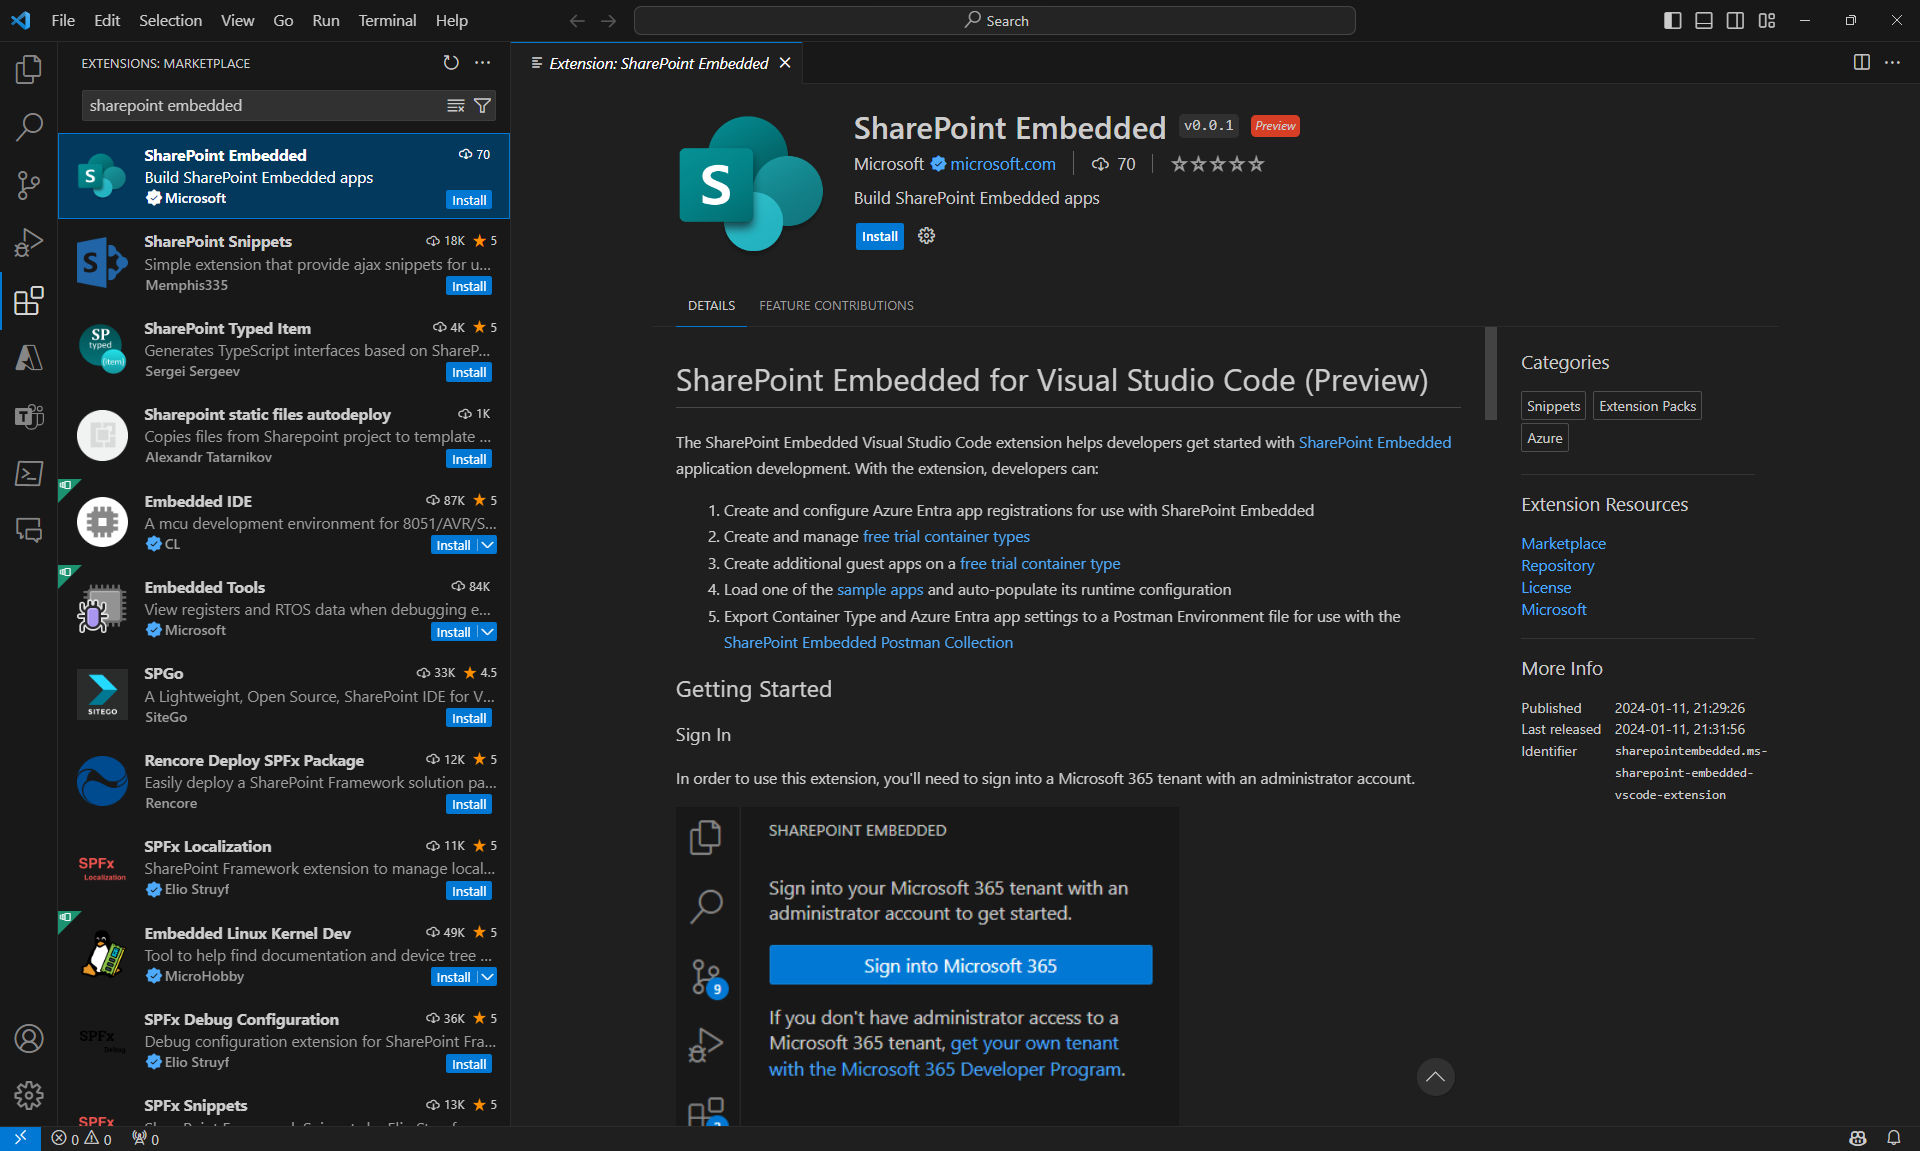 SharePoint Embedded on Visual Studio Code Marketplace